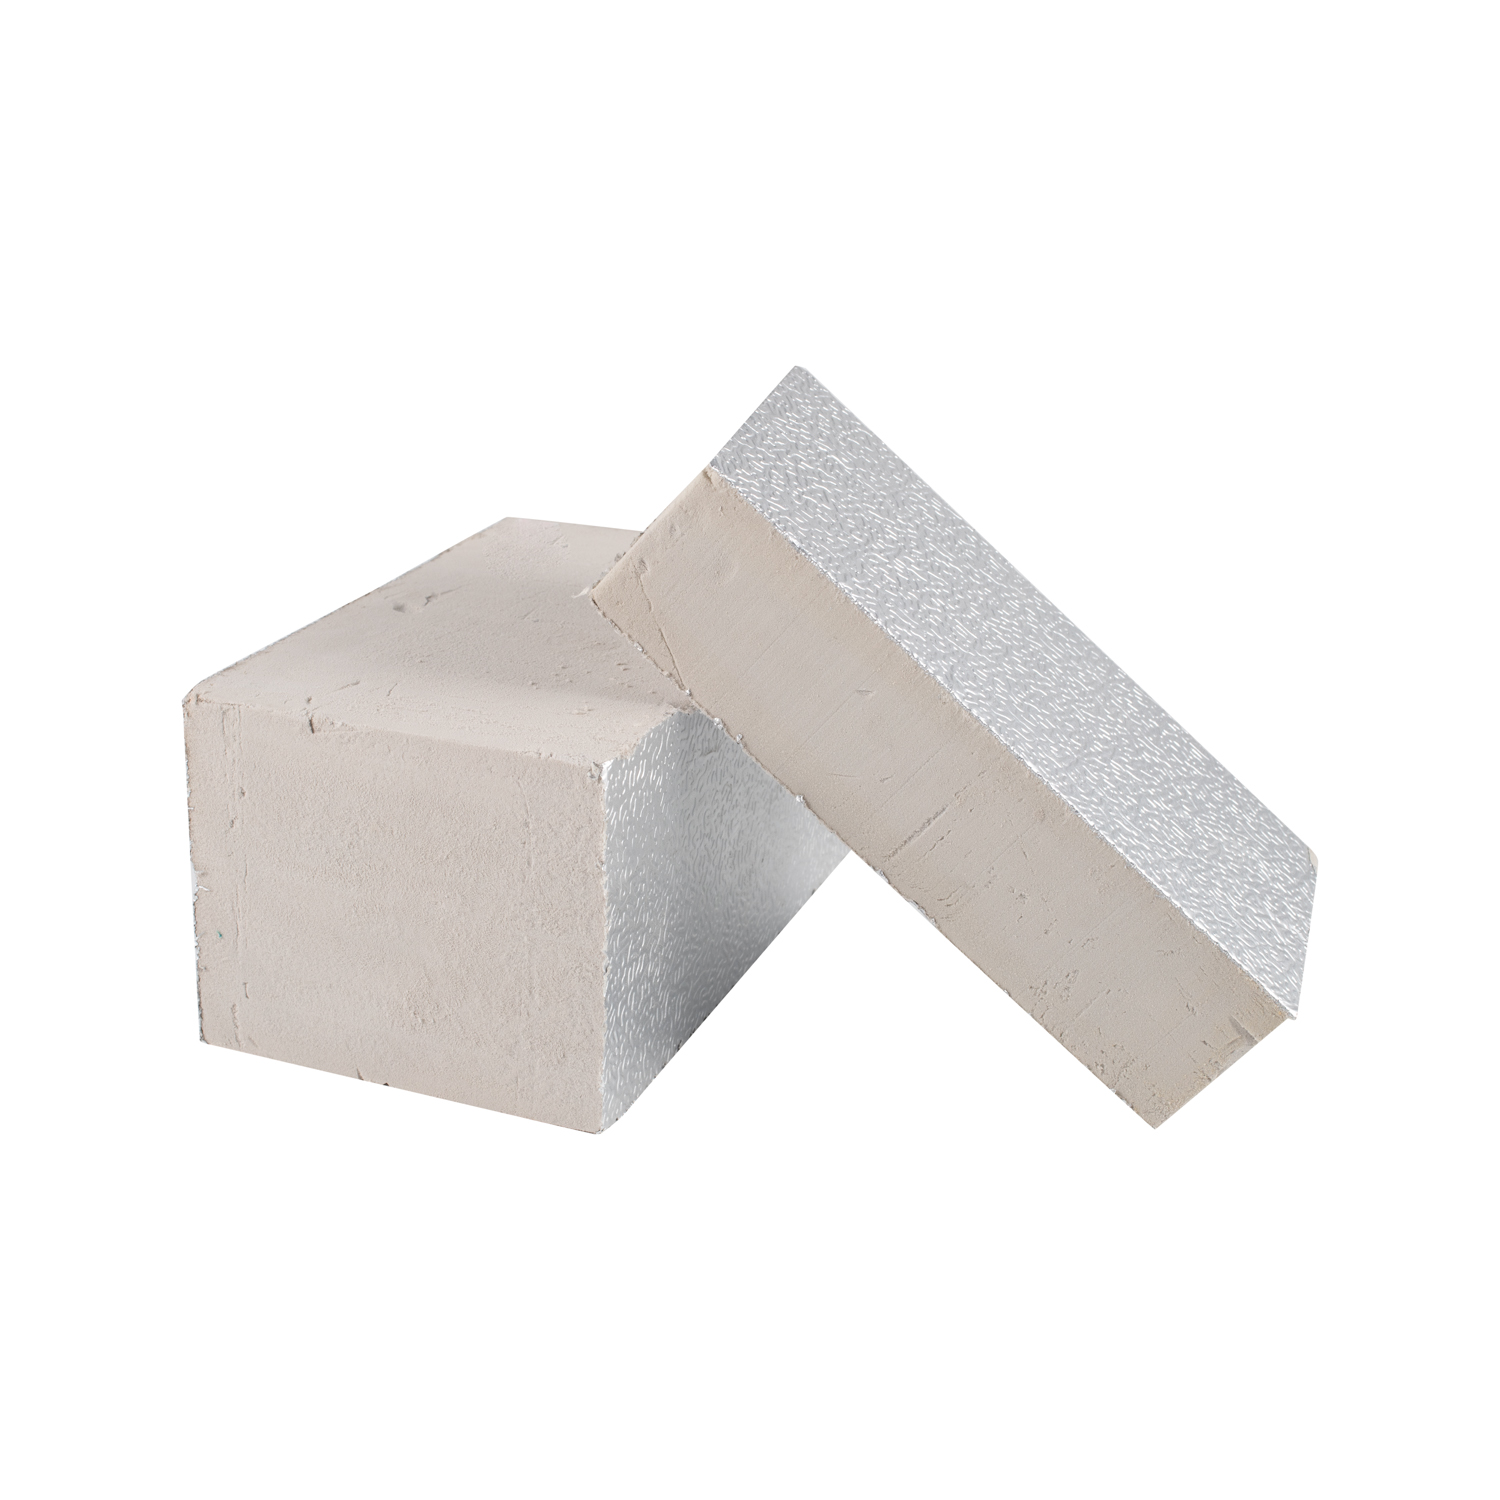 Aluminum Foil Laminated Phenolic Insulation Panel for Exterior Wall